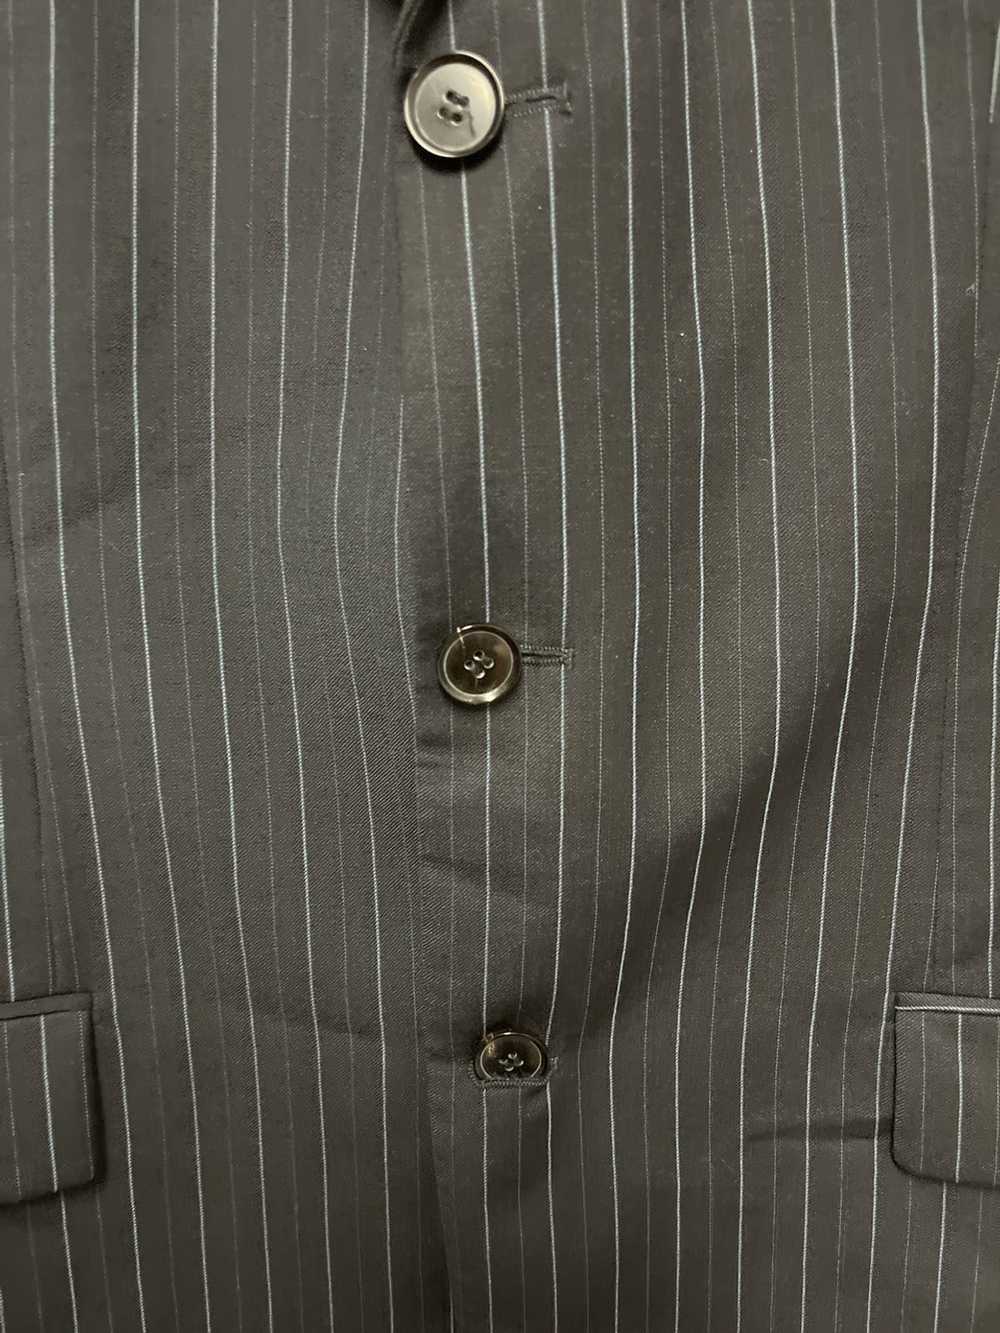 Hugo Boss Hugo Boss Striped Suit Jacket - image 3